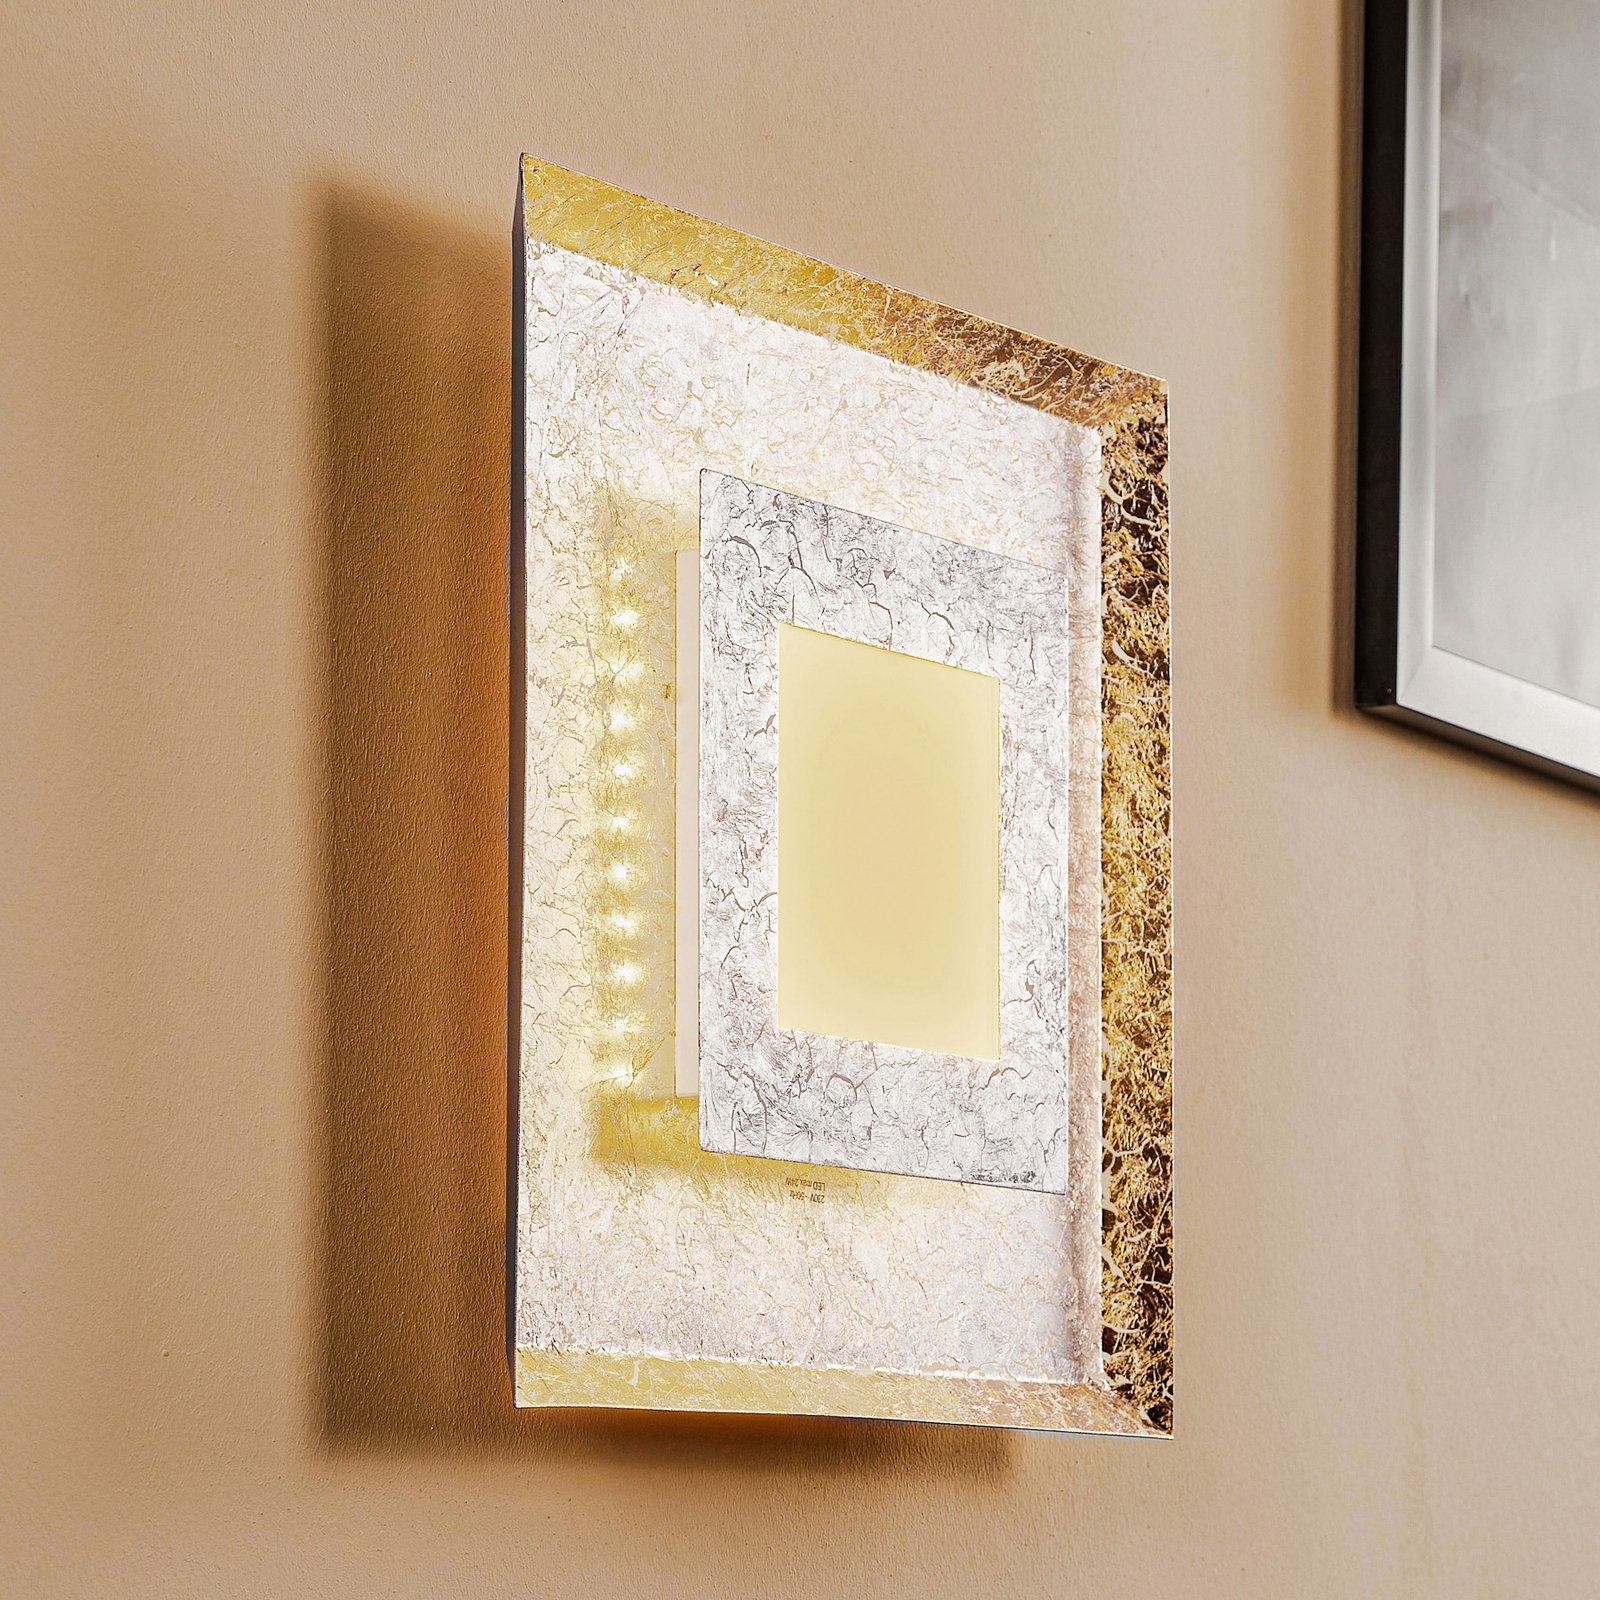 Window LED wall light 39 x 39 cm, silver